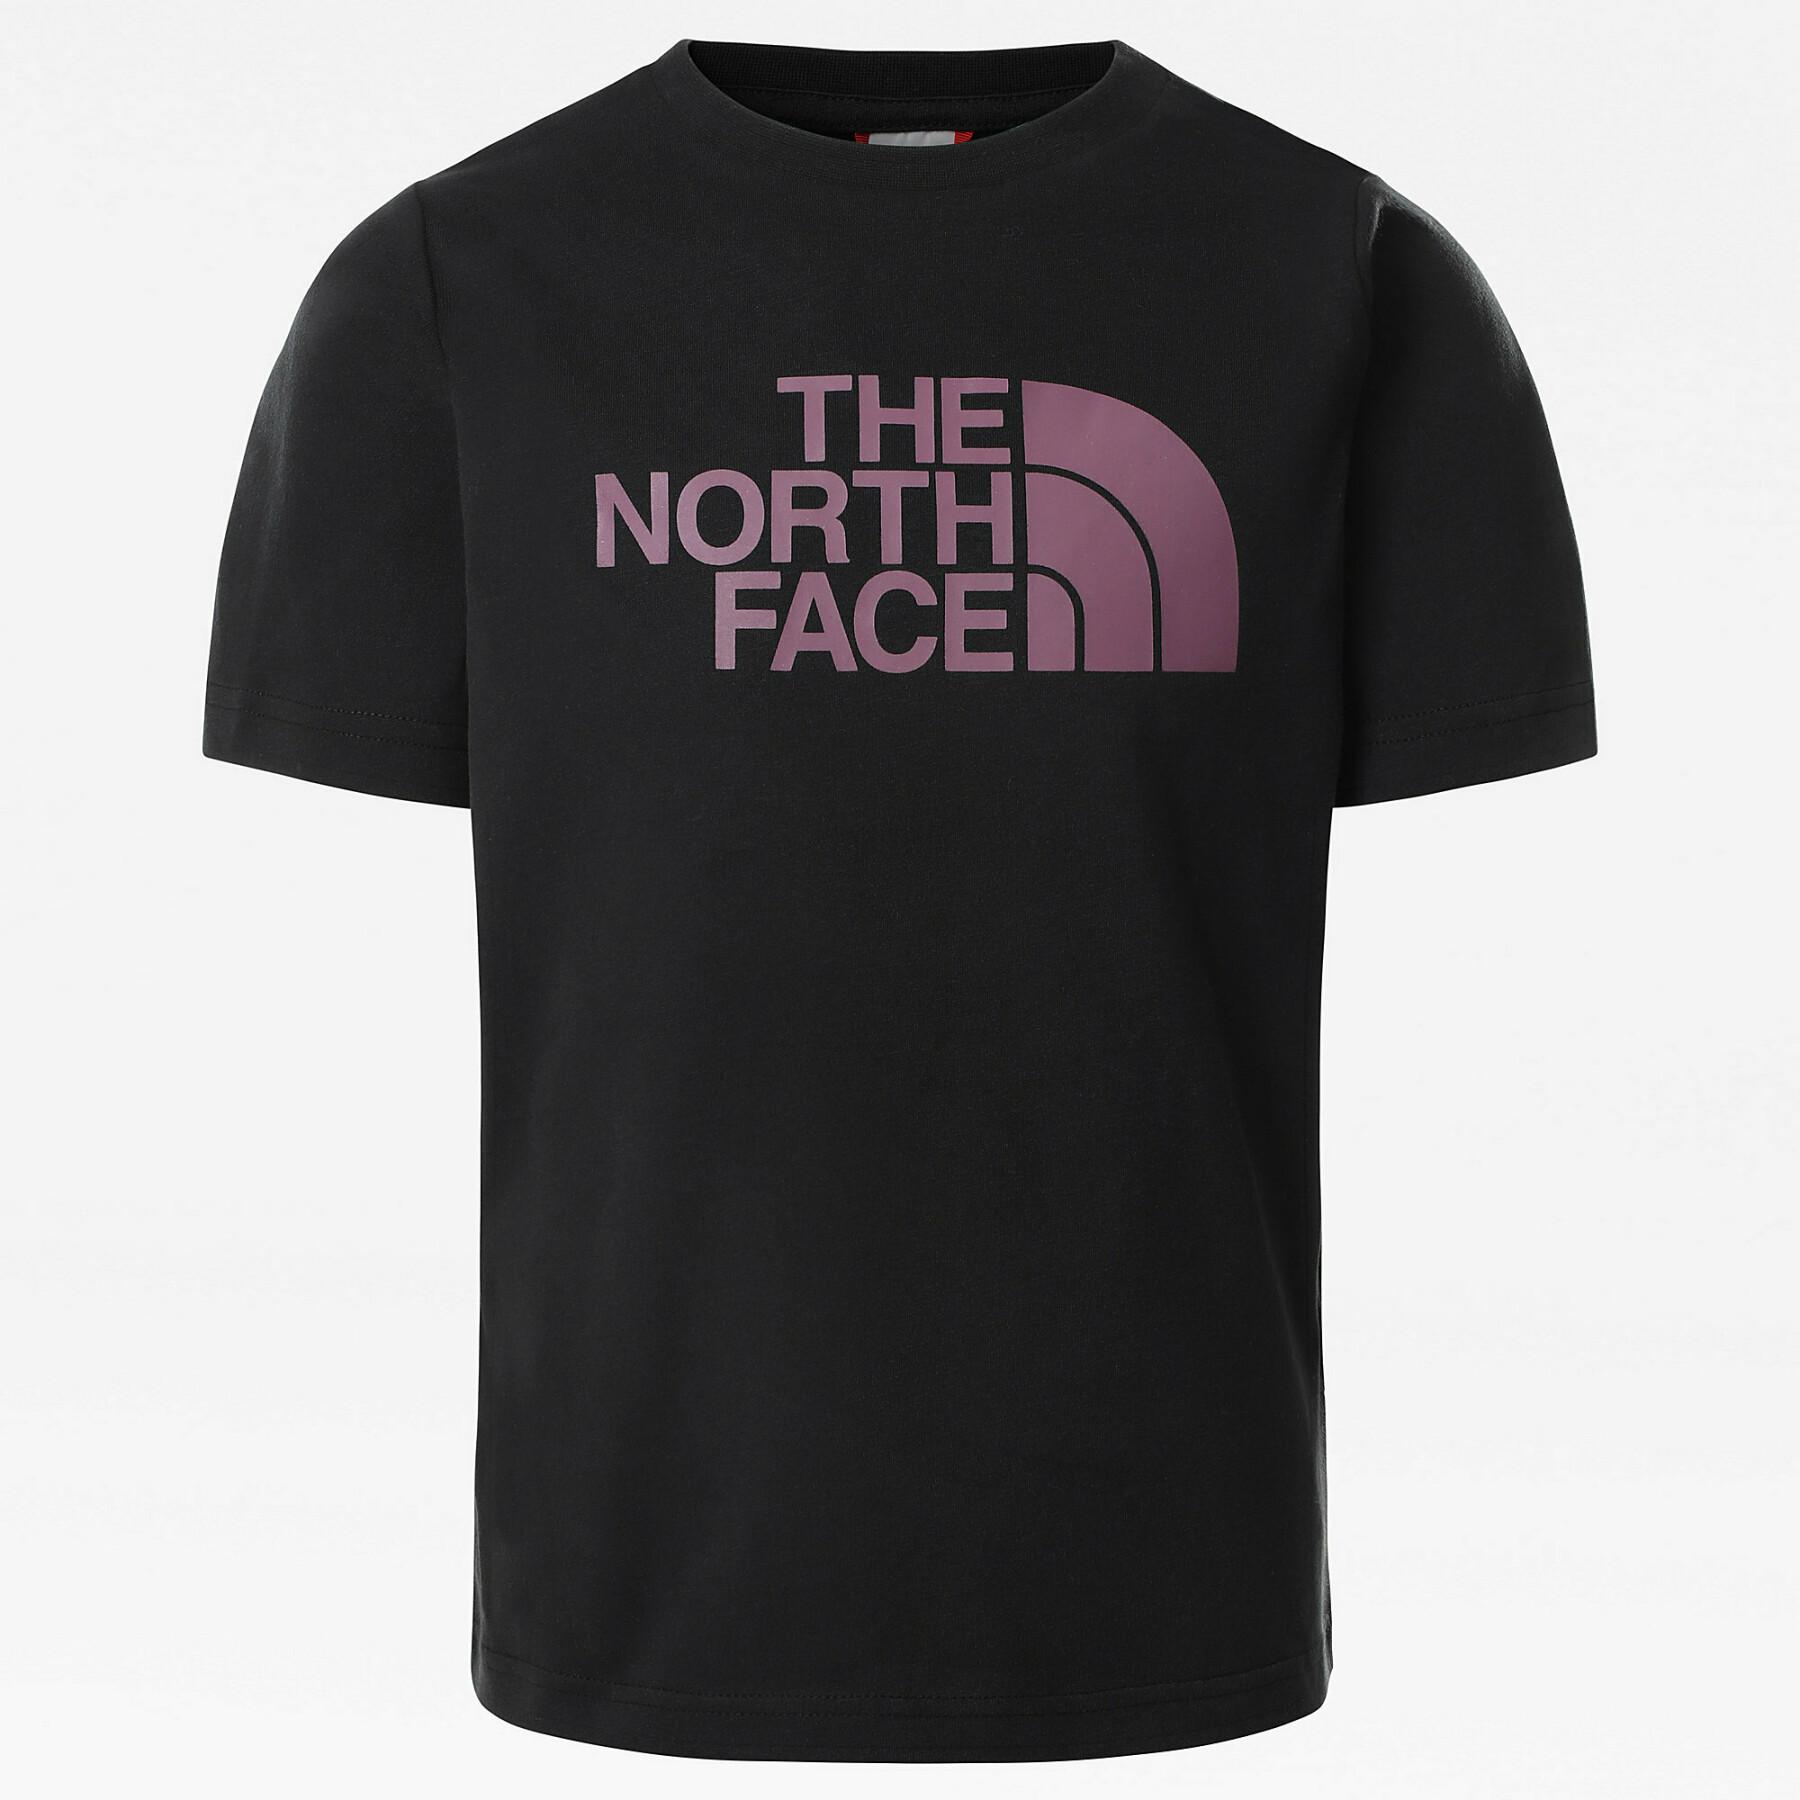 T-shirt de rapariga The North Face Easy